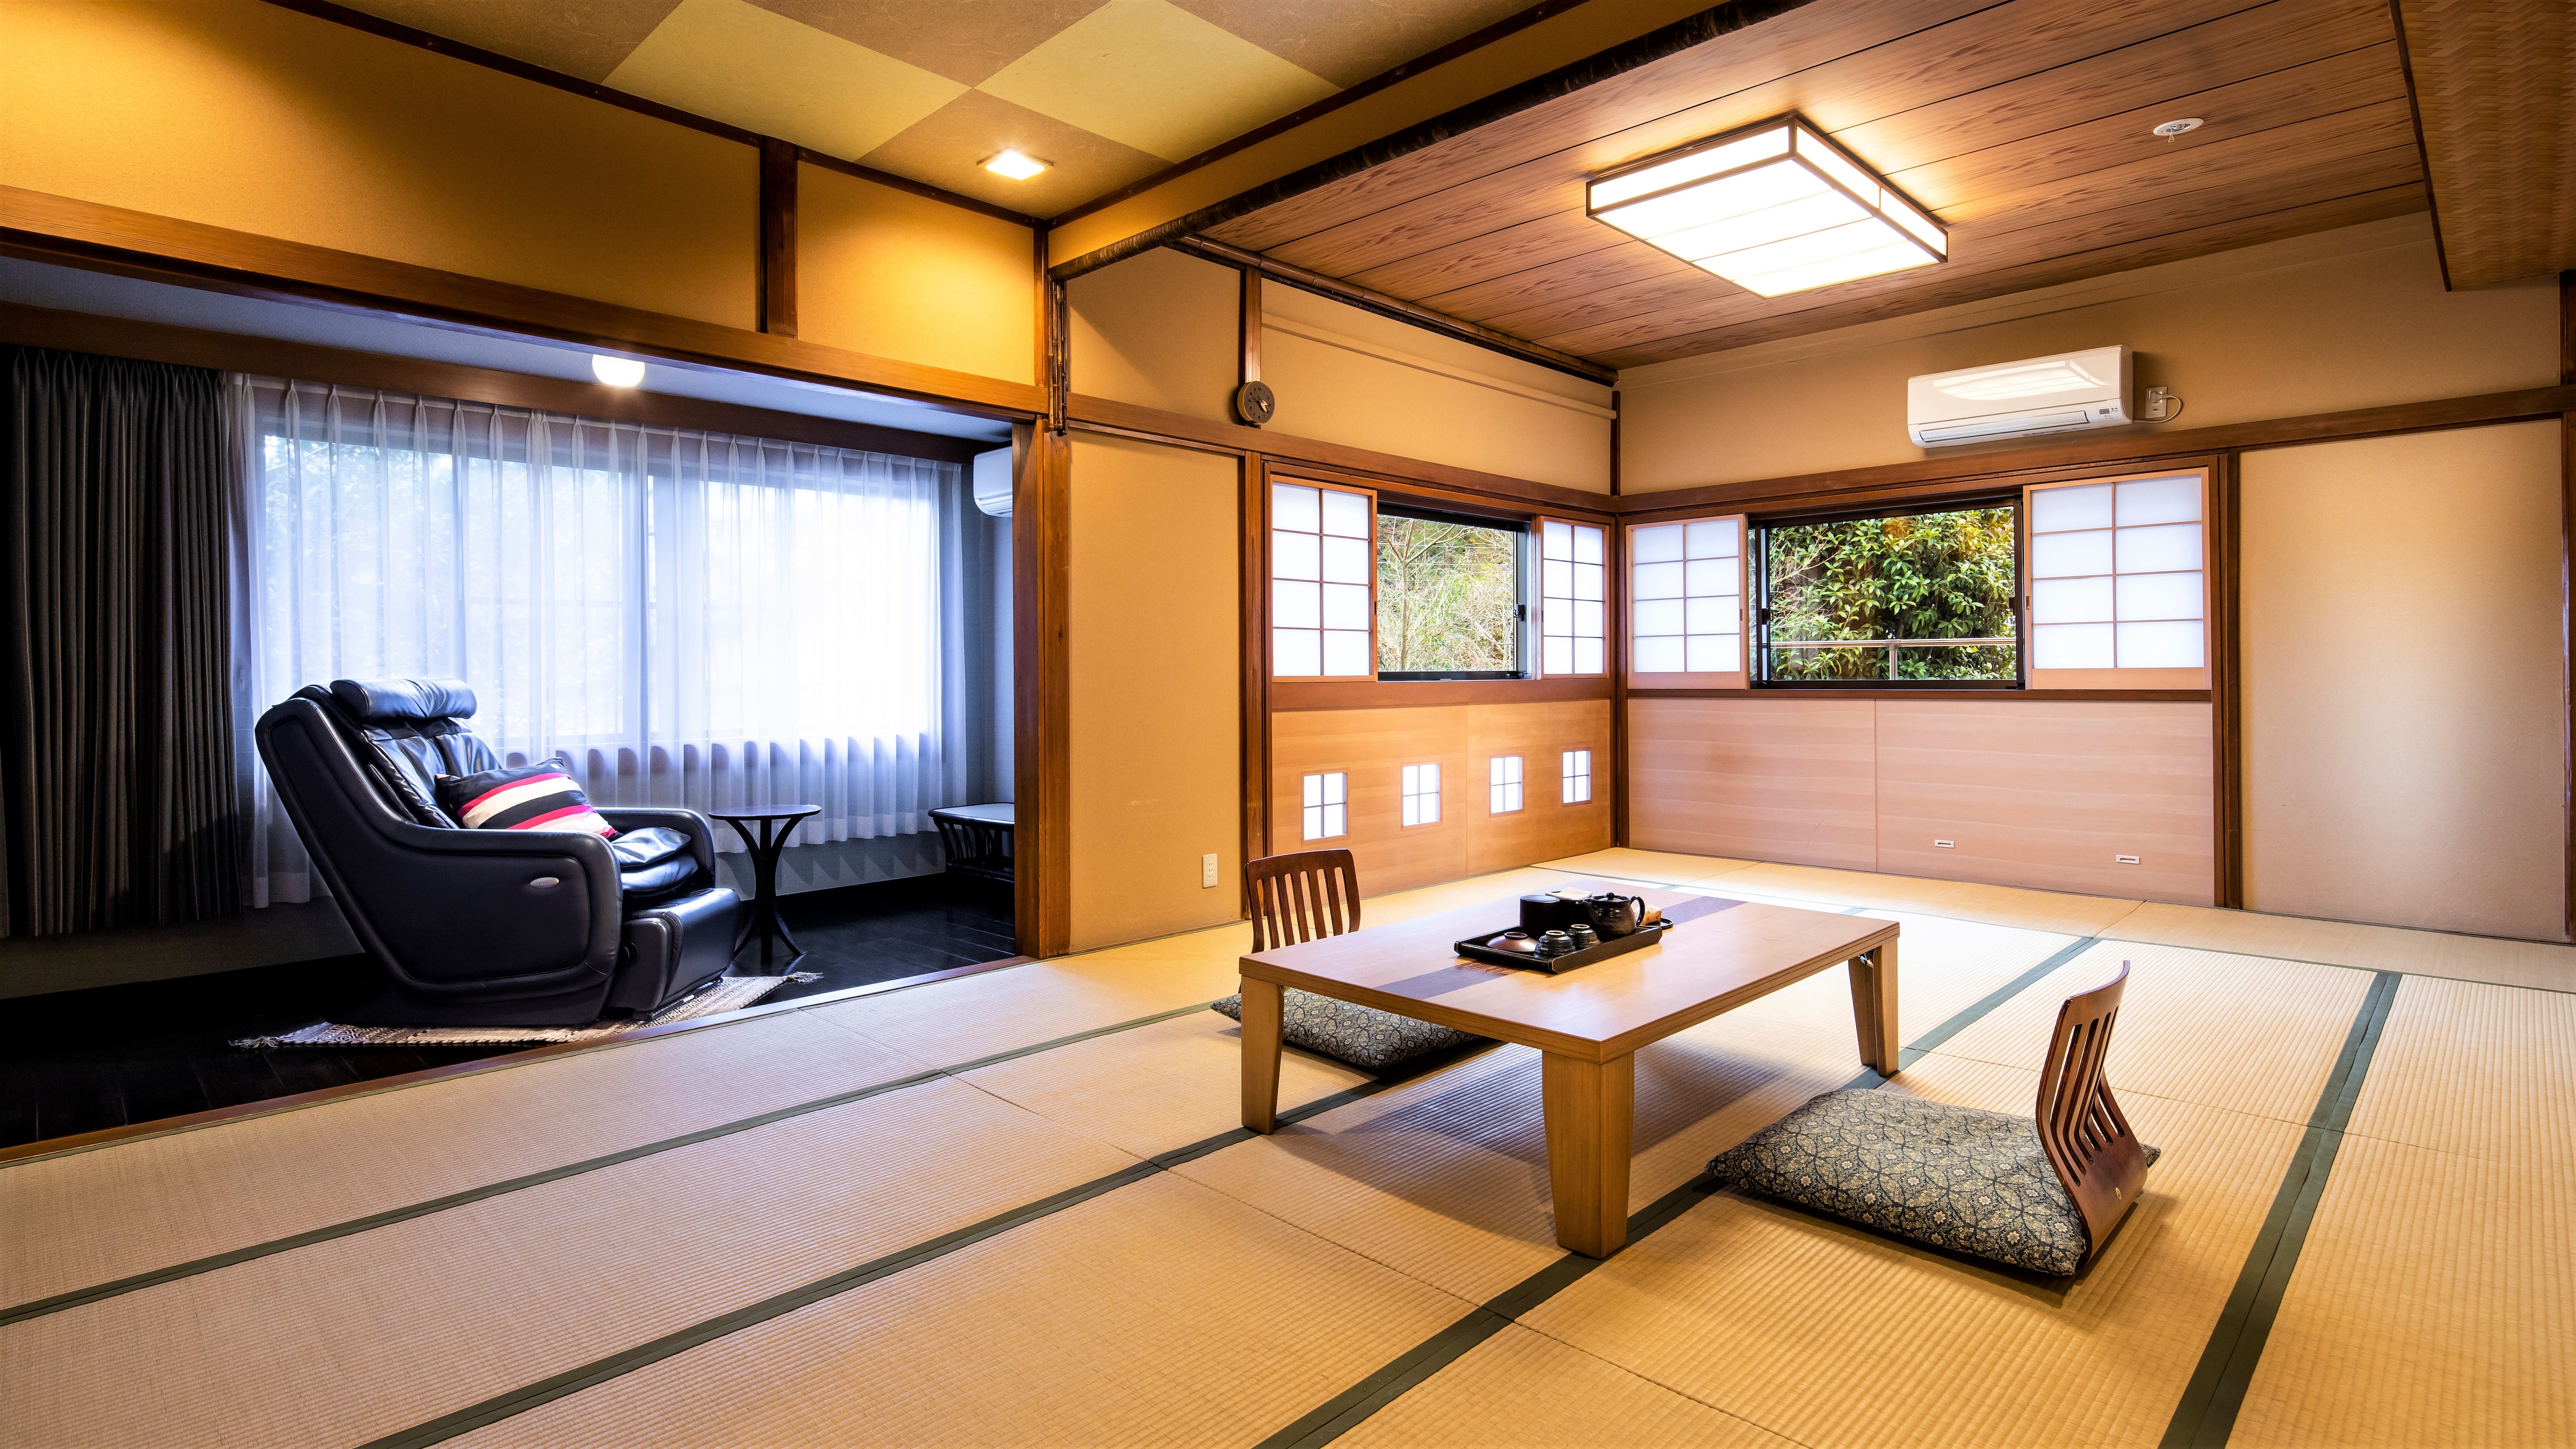 2nd floor, Japanese-style room with massage machine, 18 tatami mats